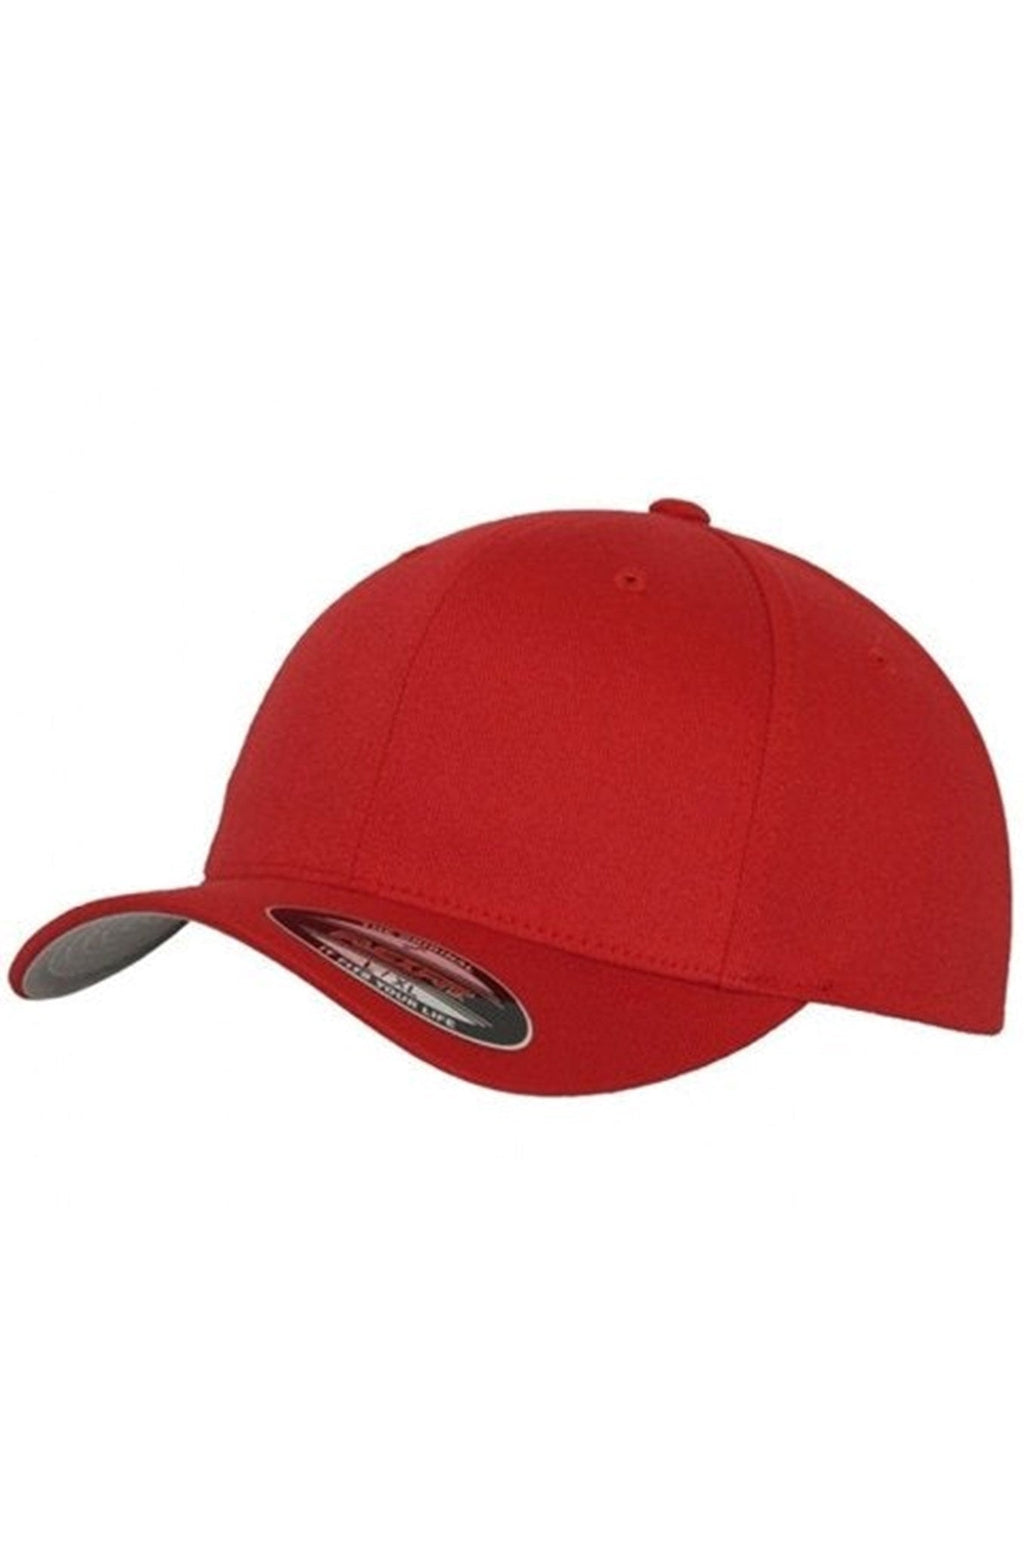 FlexFit Original Baseball Cap - Red